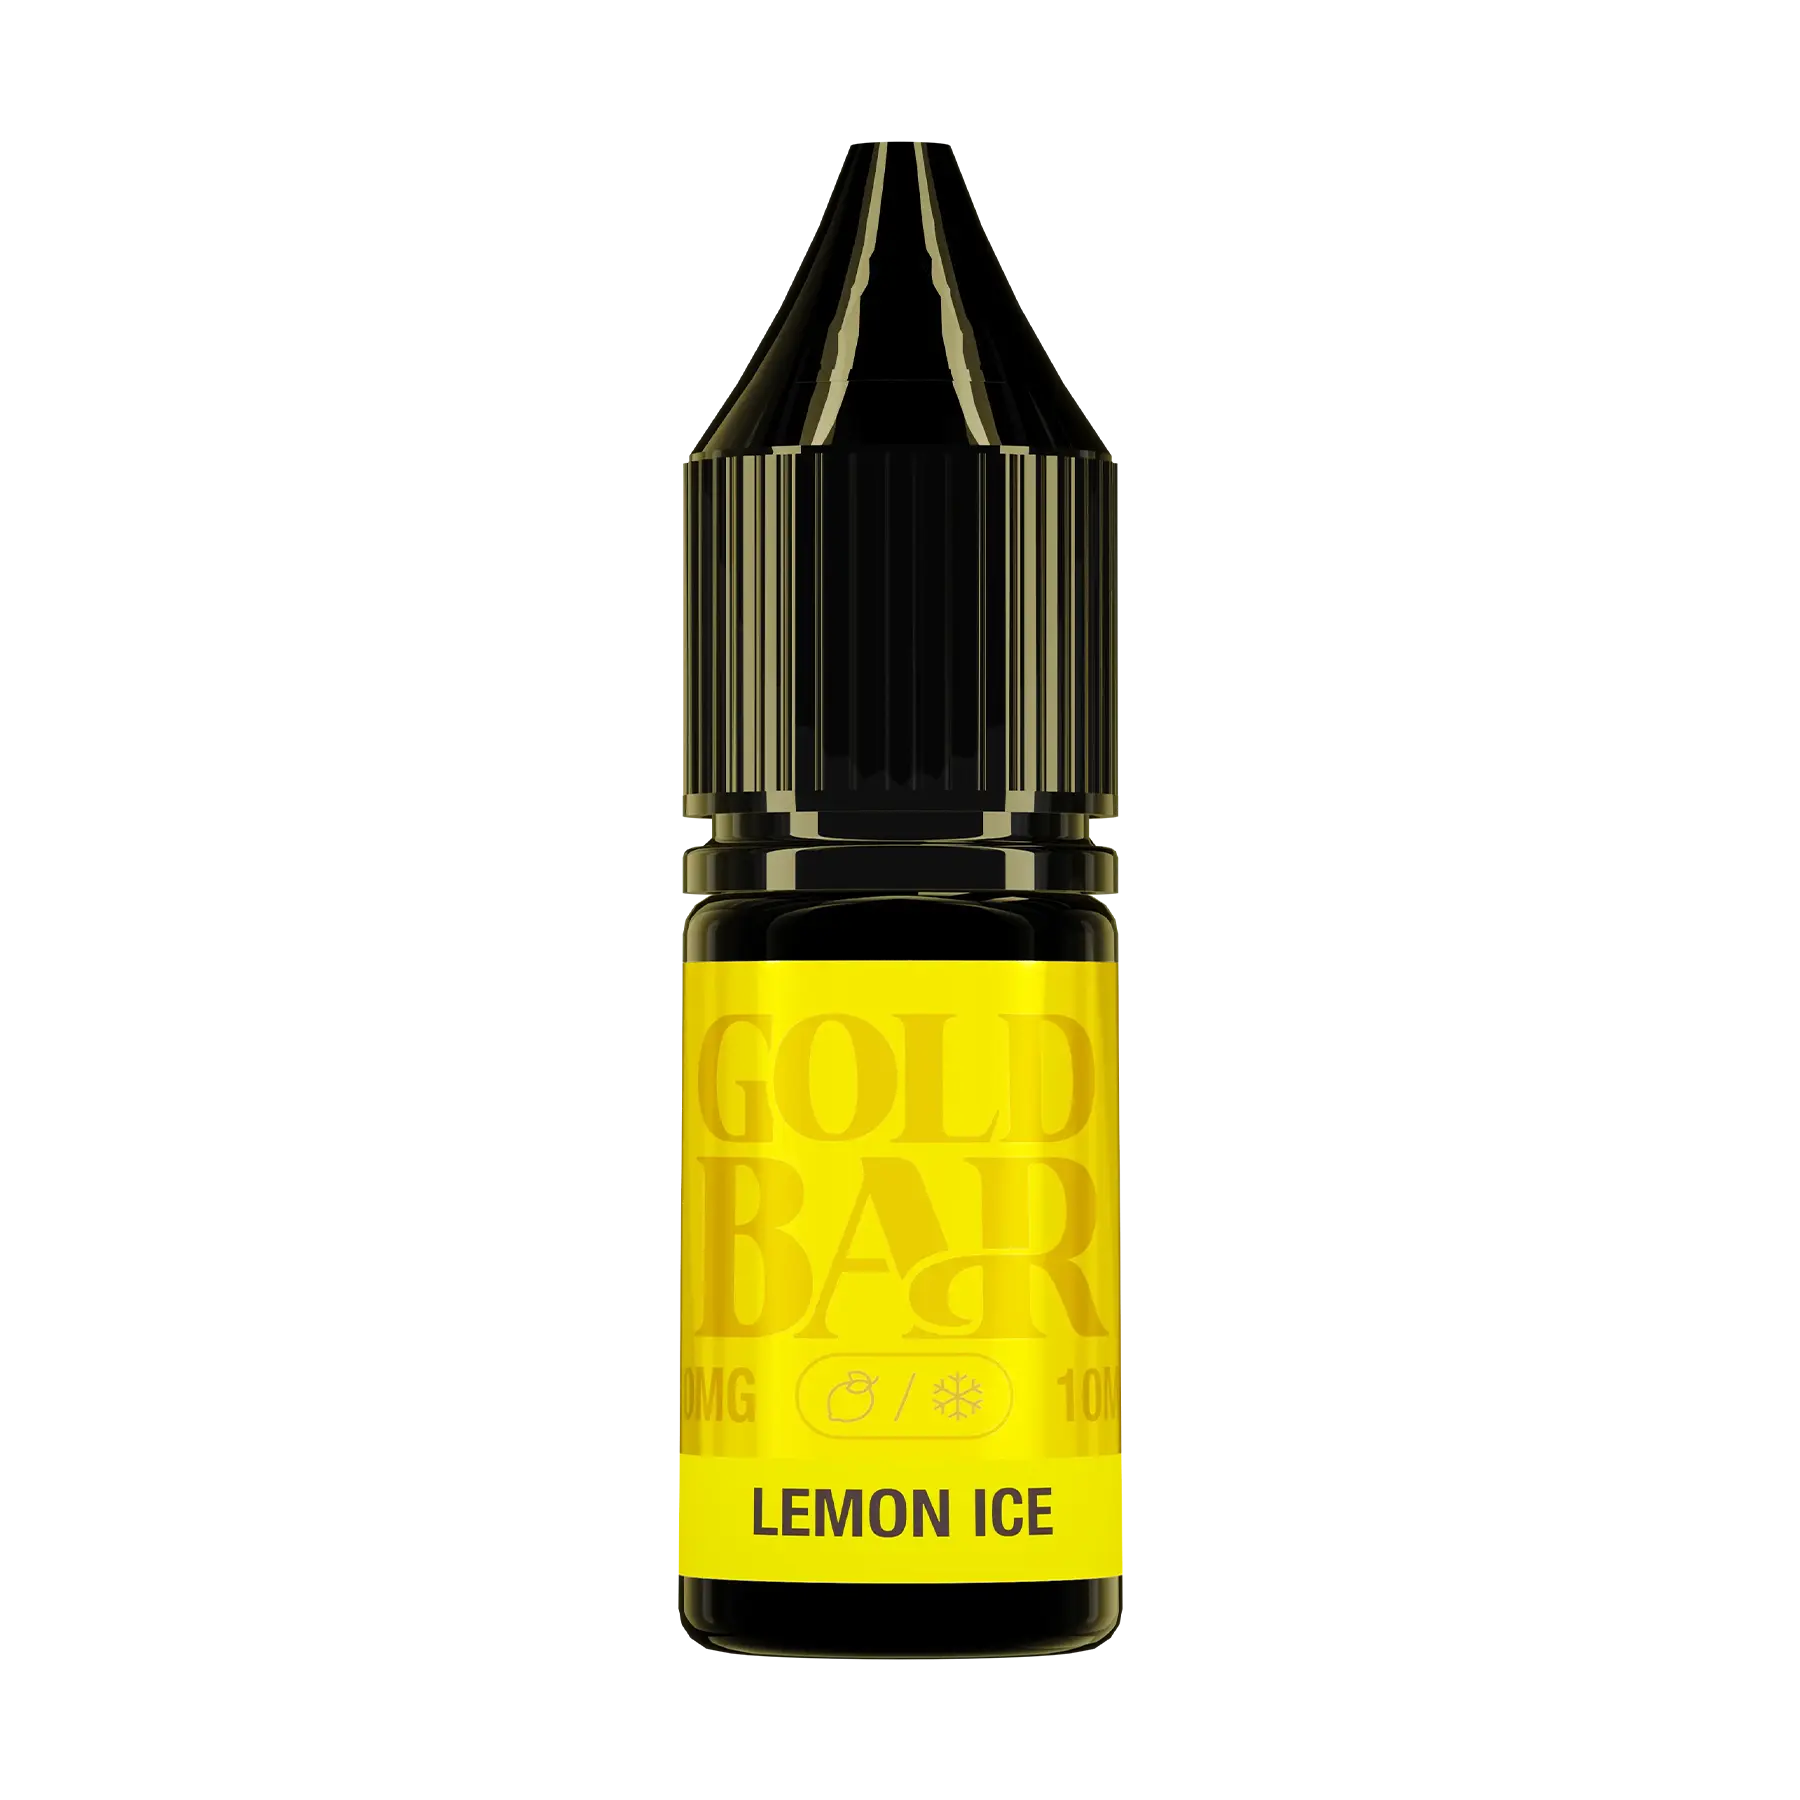 Gold Bar - Lemon Ice 10ml E Liquid Nicotine Salt